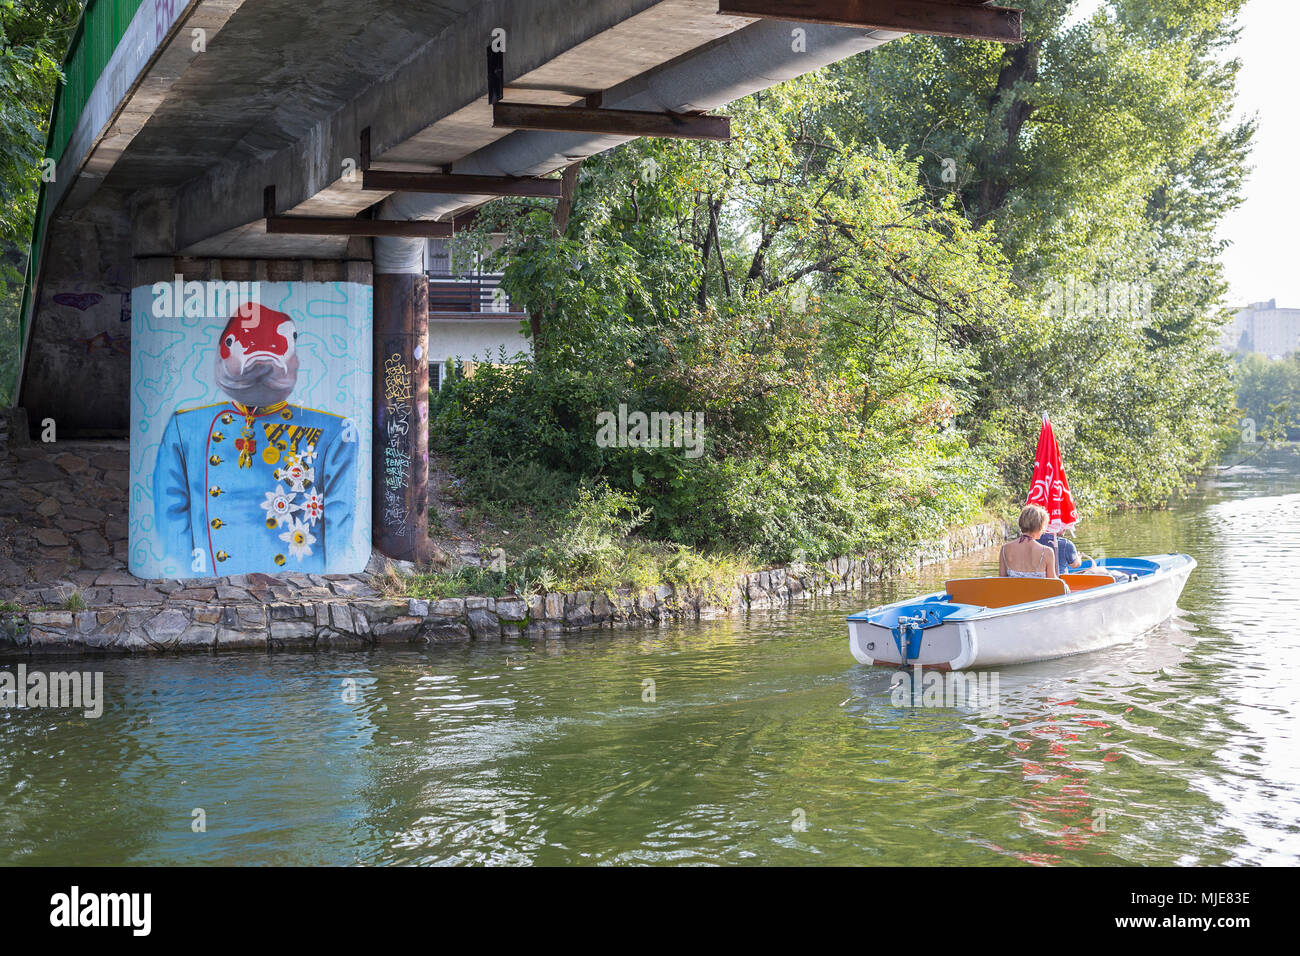 On the 'Alte Donau', graffiti on a pier, electric boat, Kaisermühlen, 22nd district, Donaustadt, Vienna, Austria Stock Photo